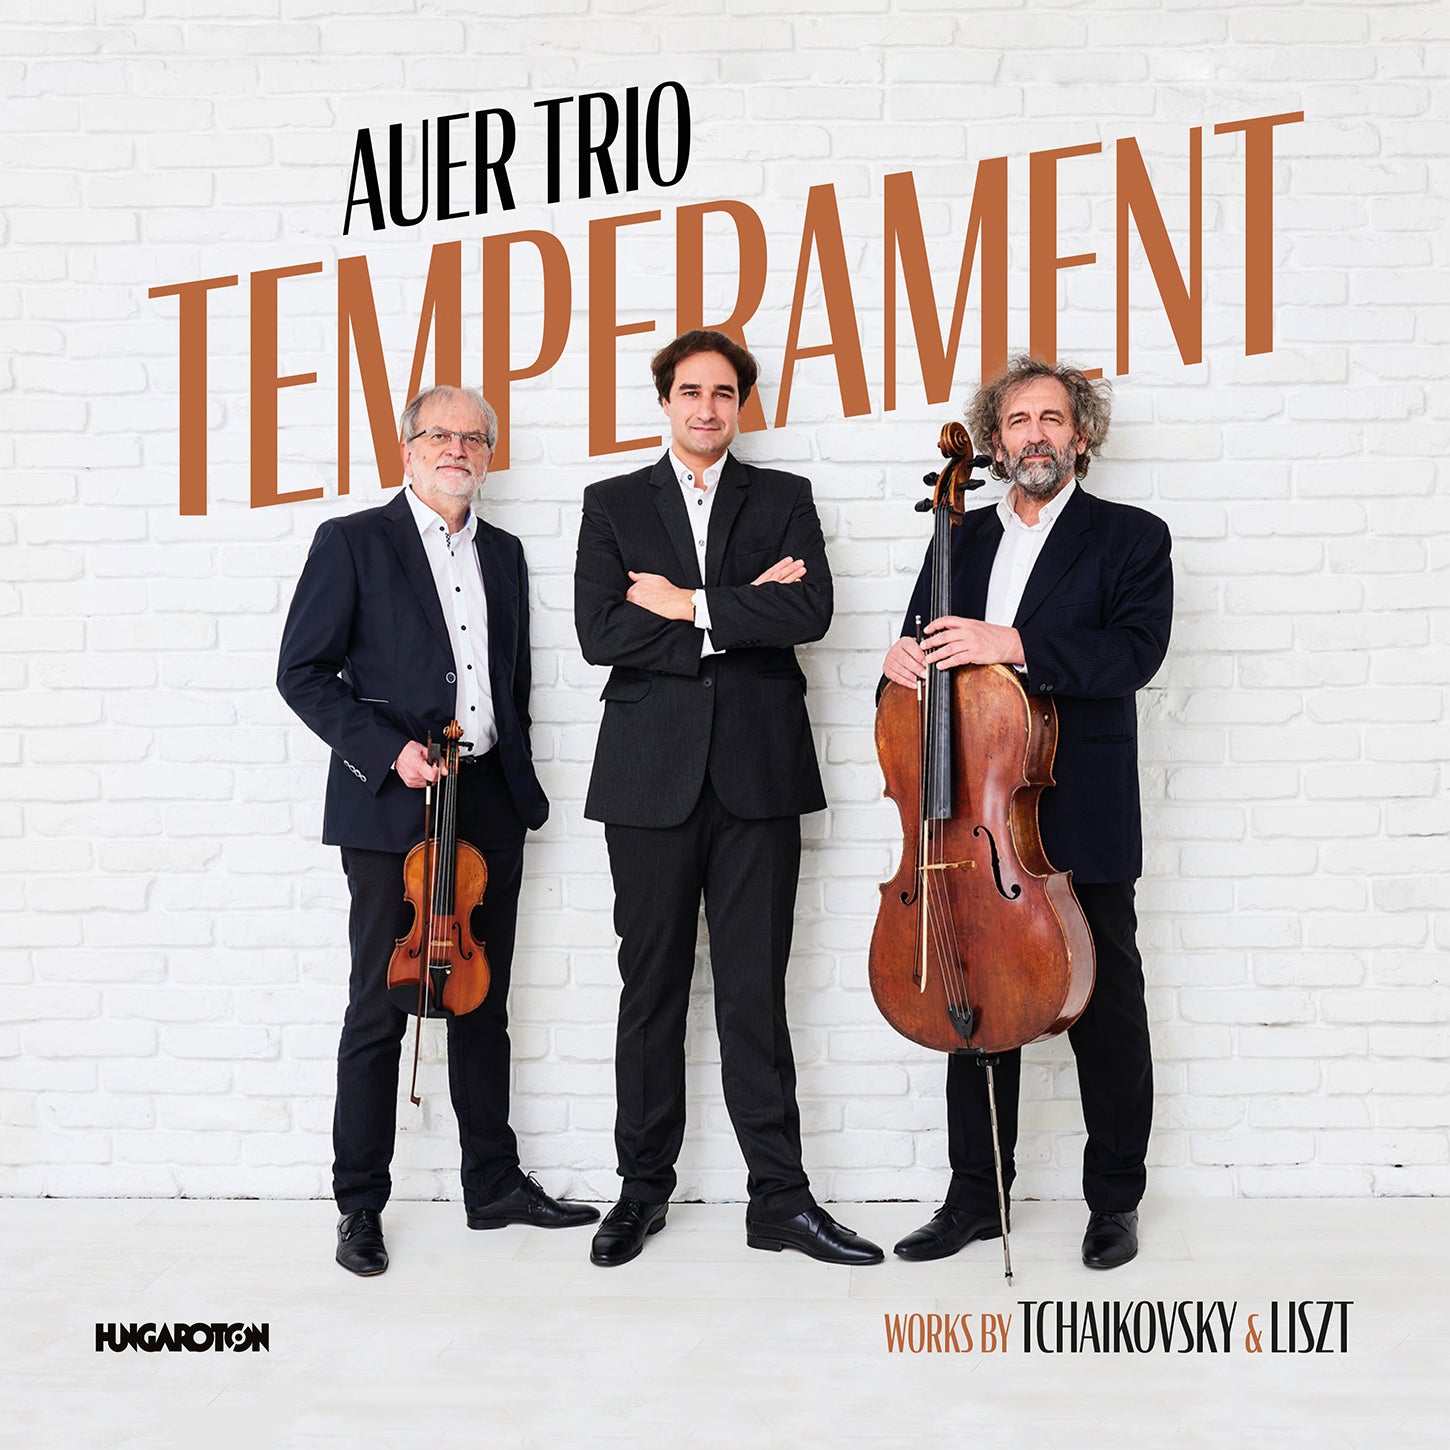 Tchaikovsky & Liszt: Temperament / Auer Trio